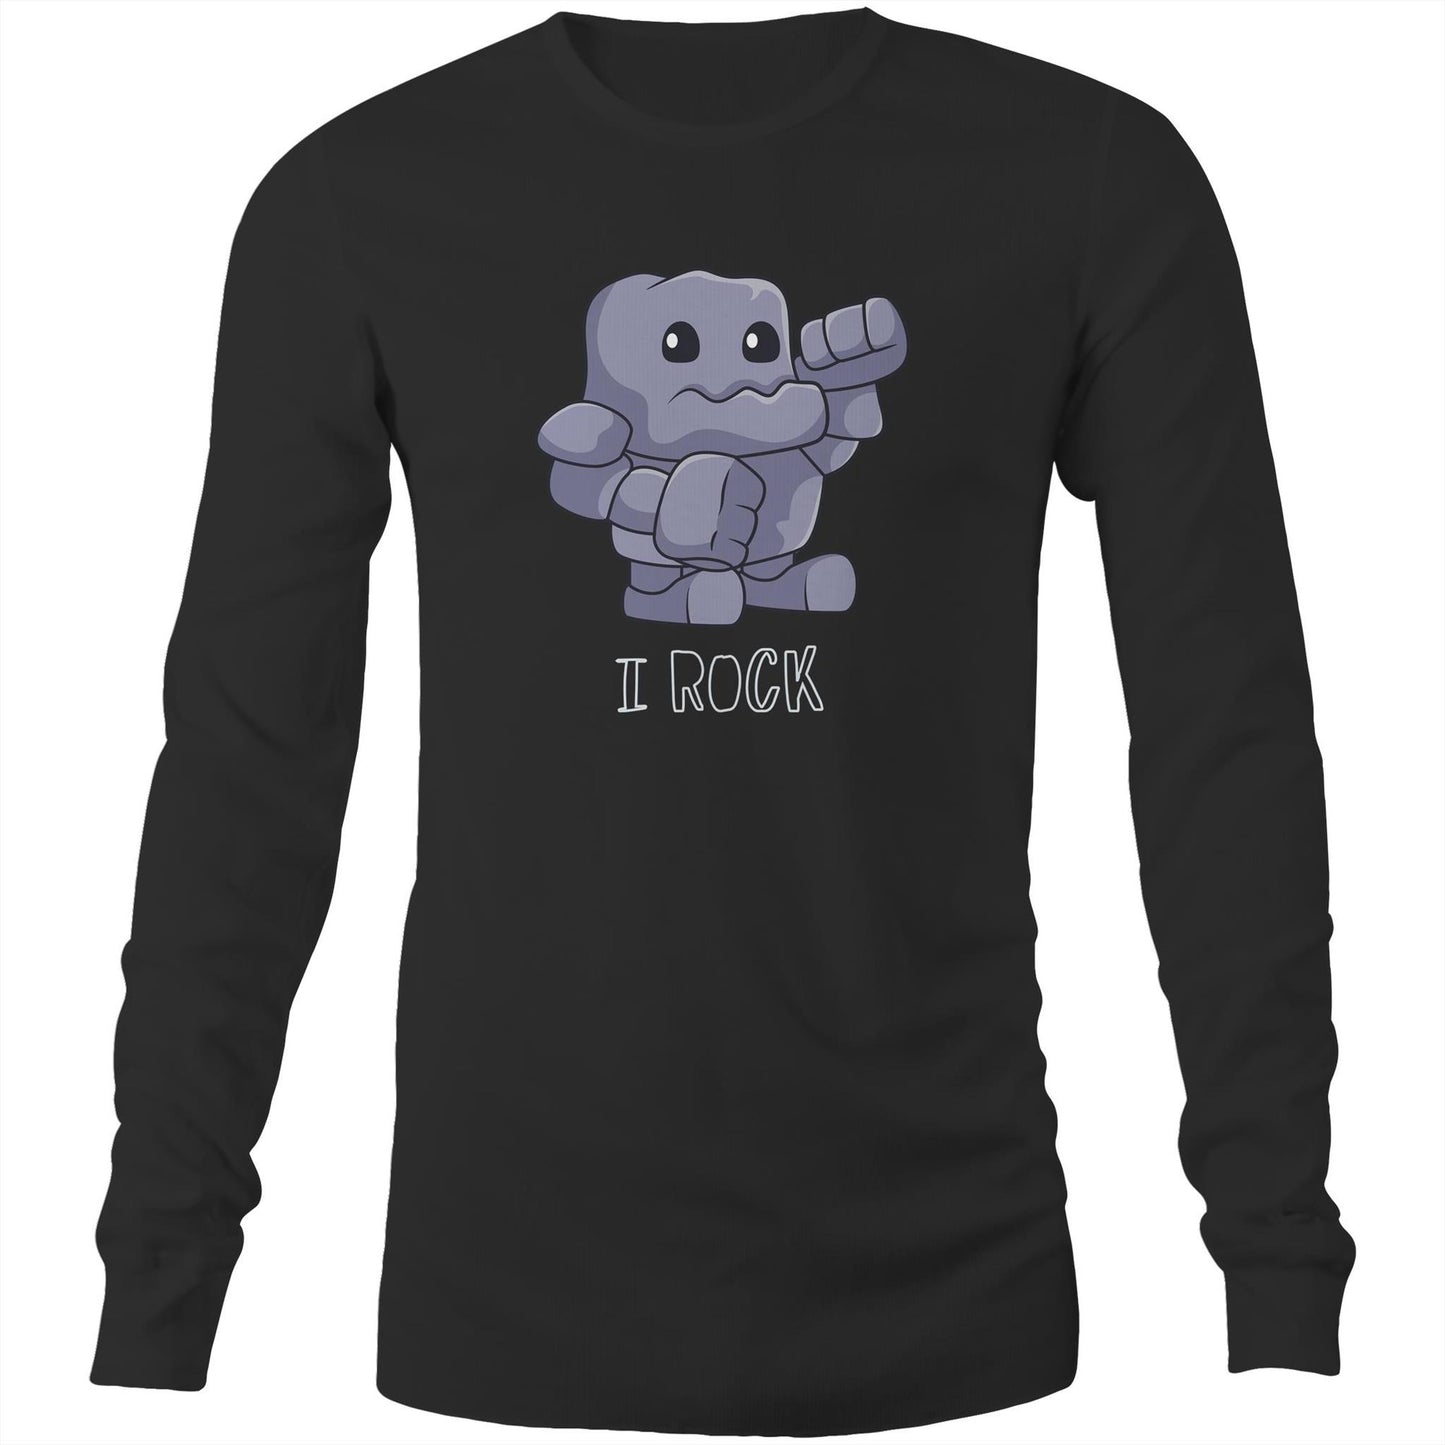 I Rock - Long Sleeve T-Shirt Black Unisex Long Sleeve T-shirt Music